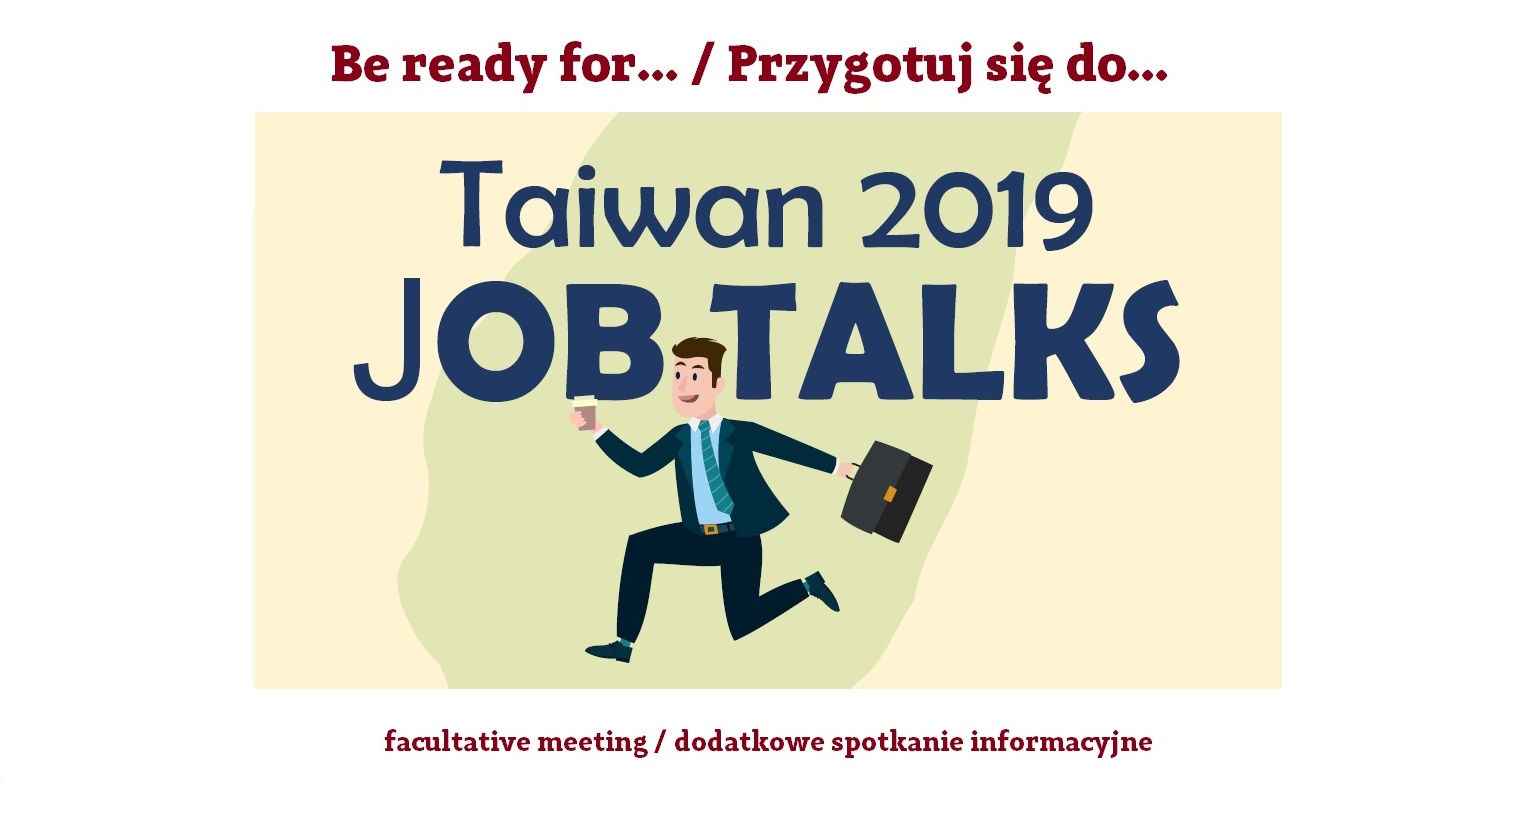 Be ready for Taiwan Job Talks / facultative meeting 